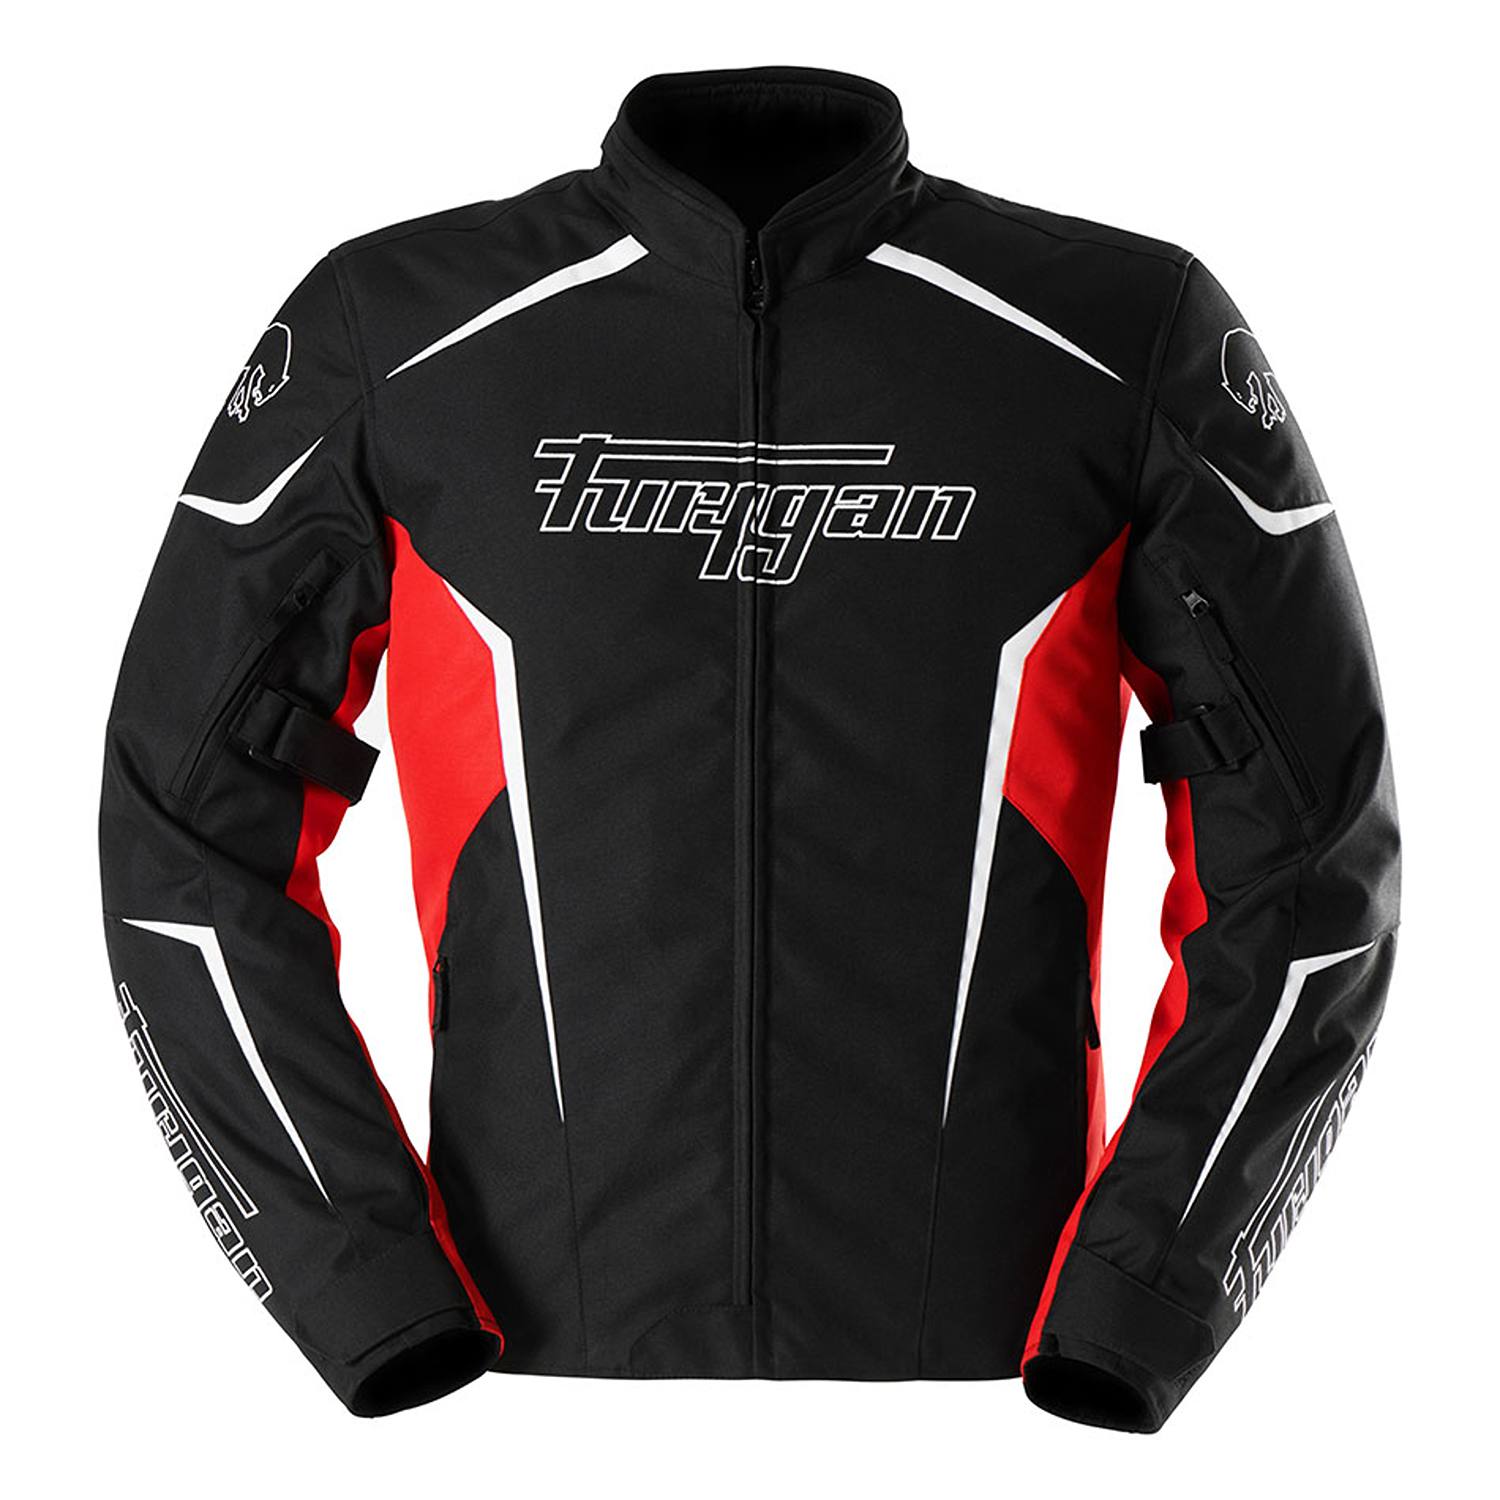 Image of Furygan Yori Jacket Black Grey Red Size XL ID 3435980354688